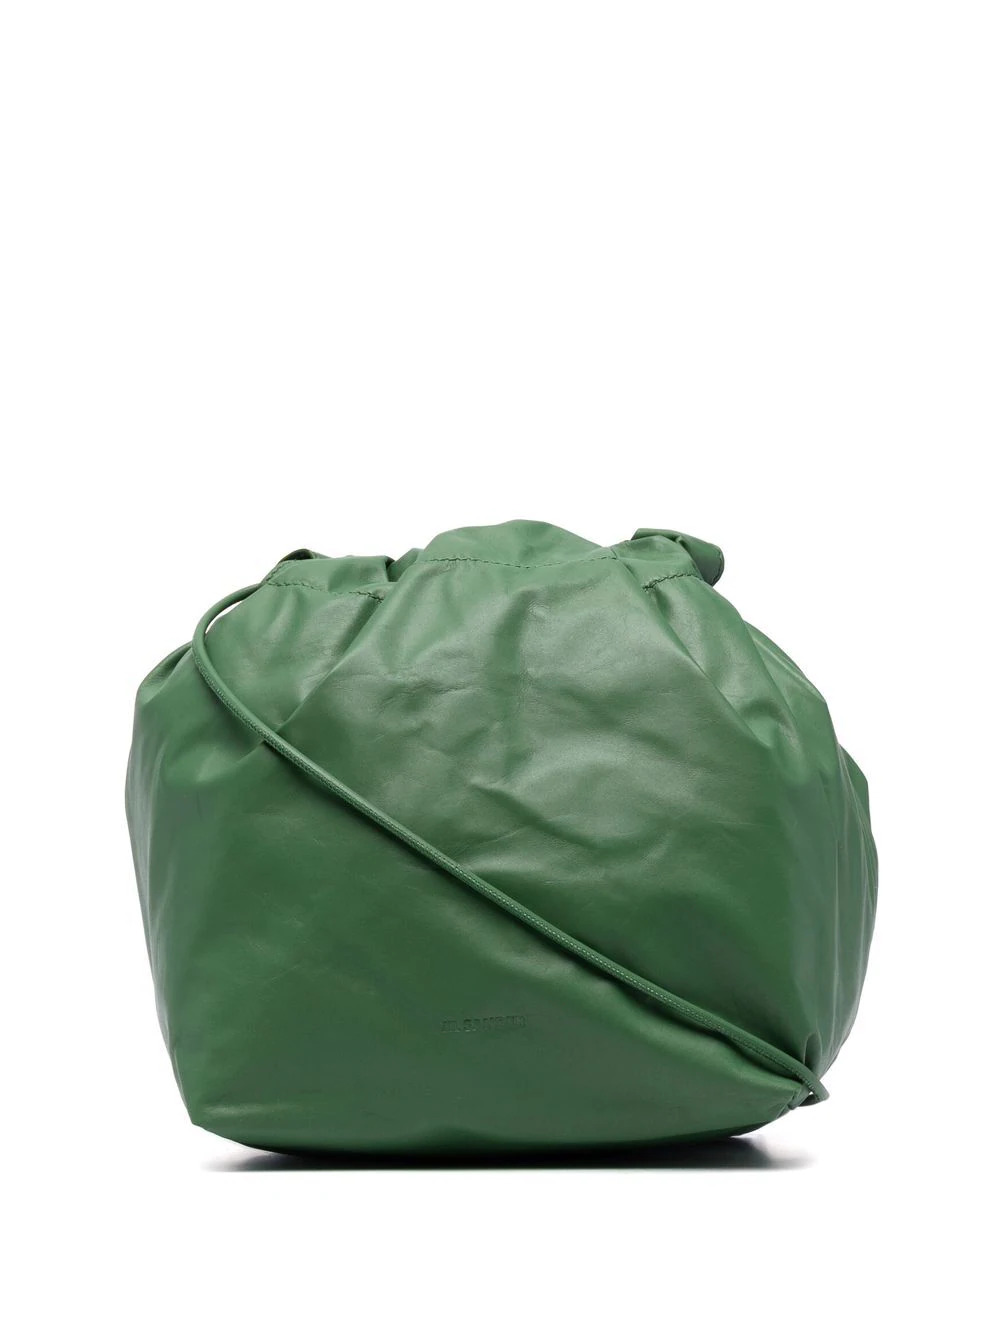 Beutel Tasche aus grünem Leder